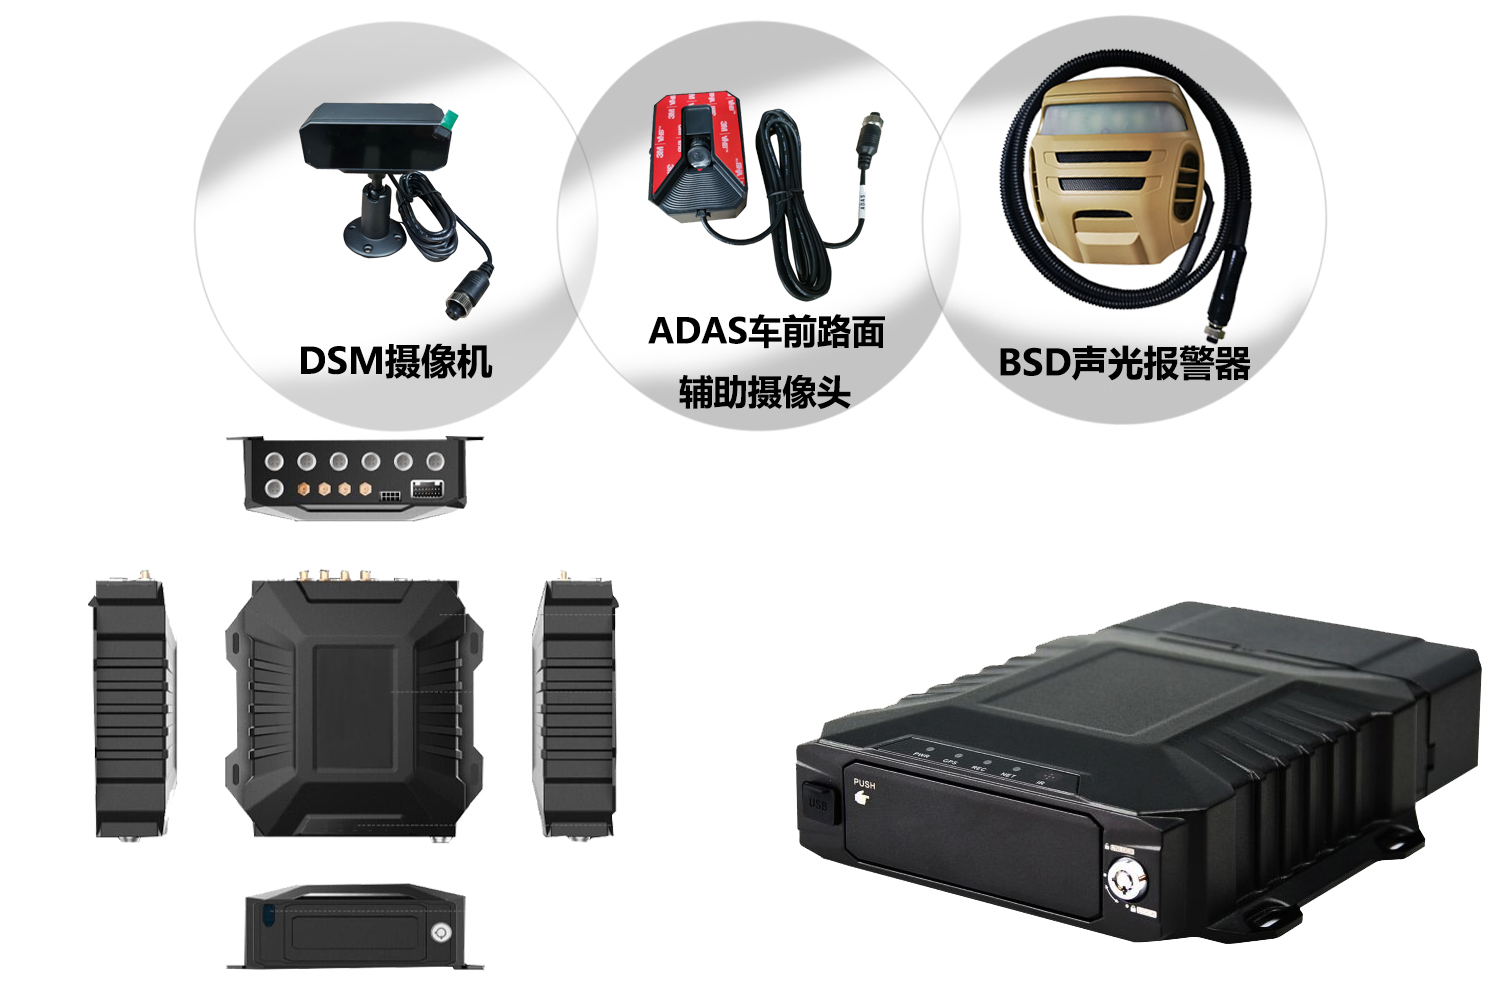 ADAS+DSM+BSD+DVR四合一车载主机